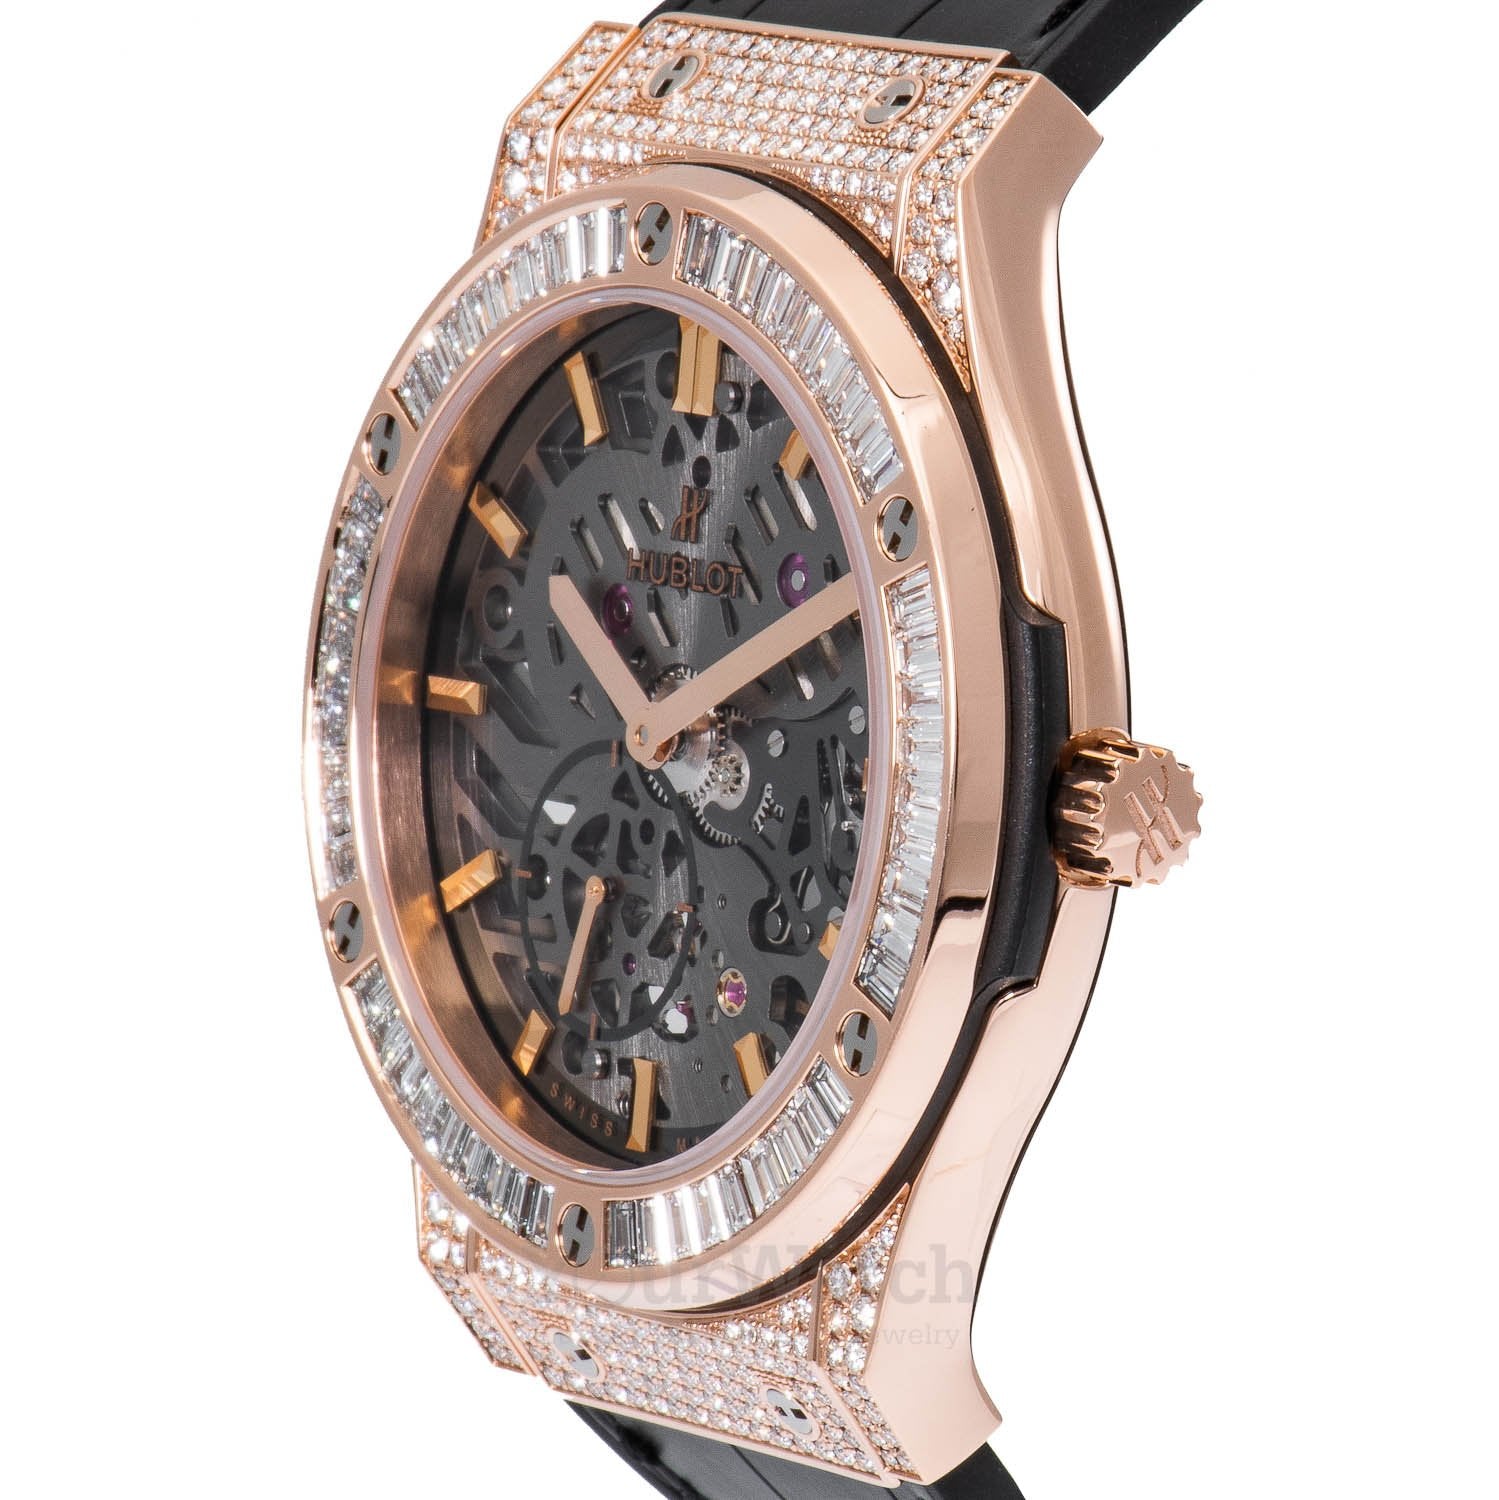 Classic Fusion Classico Ultra-Thin King Gold 45MM Men's Watch 515.OX.0180.LR.0904 